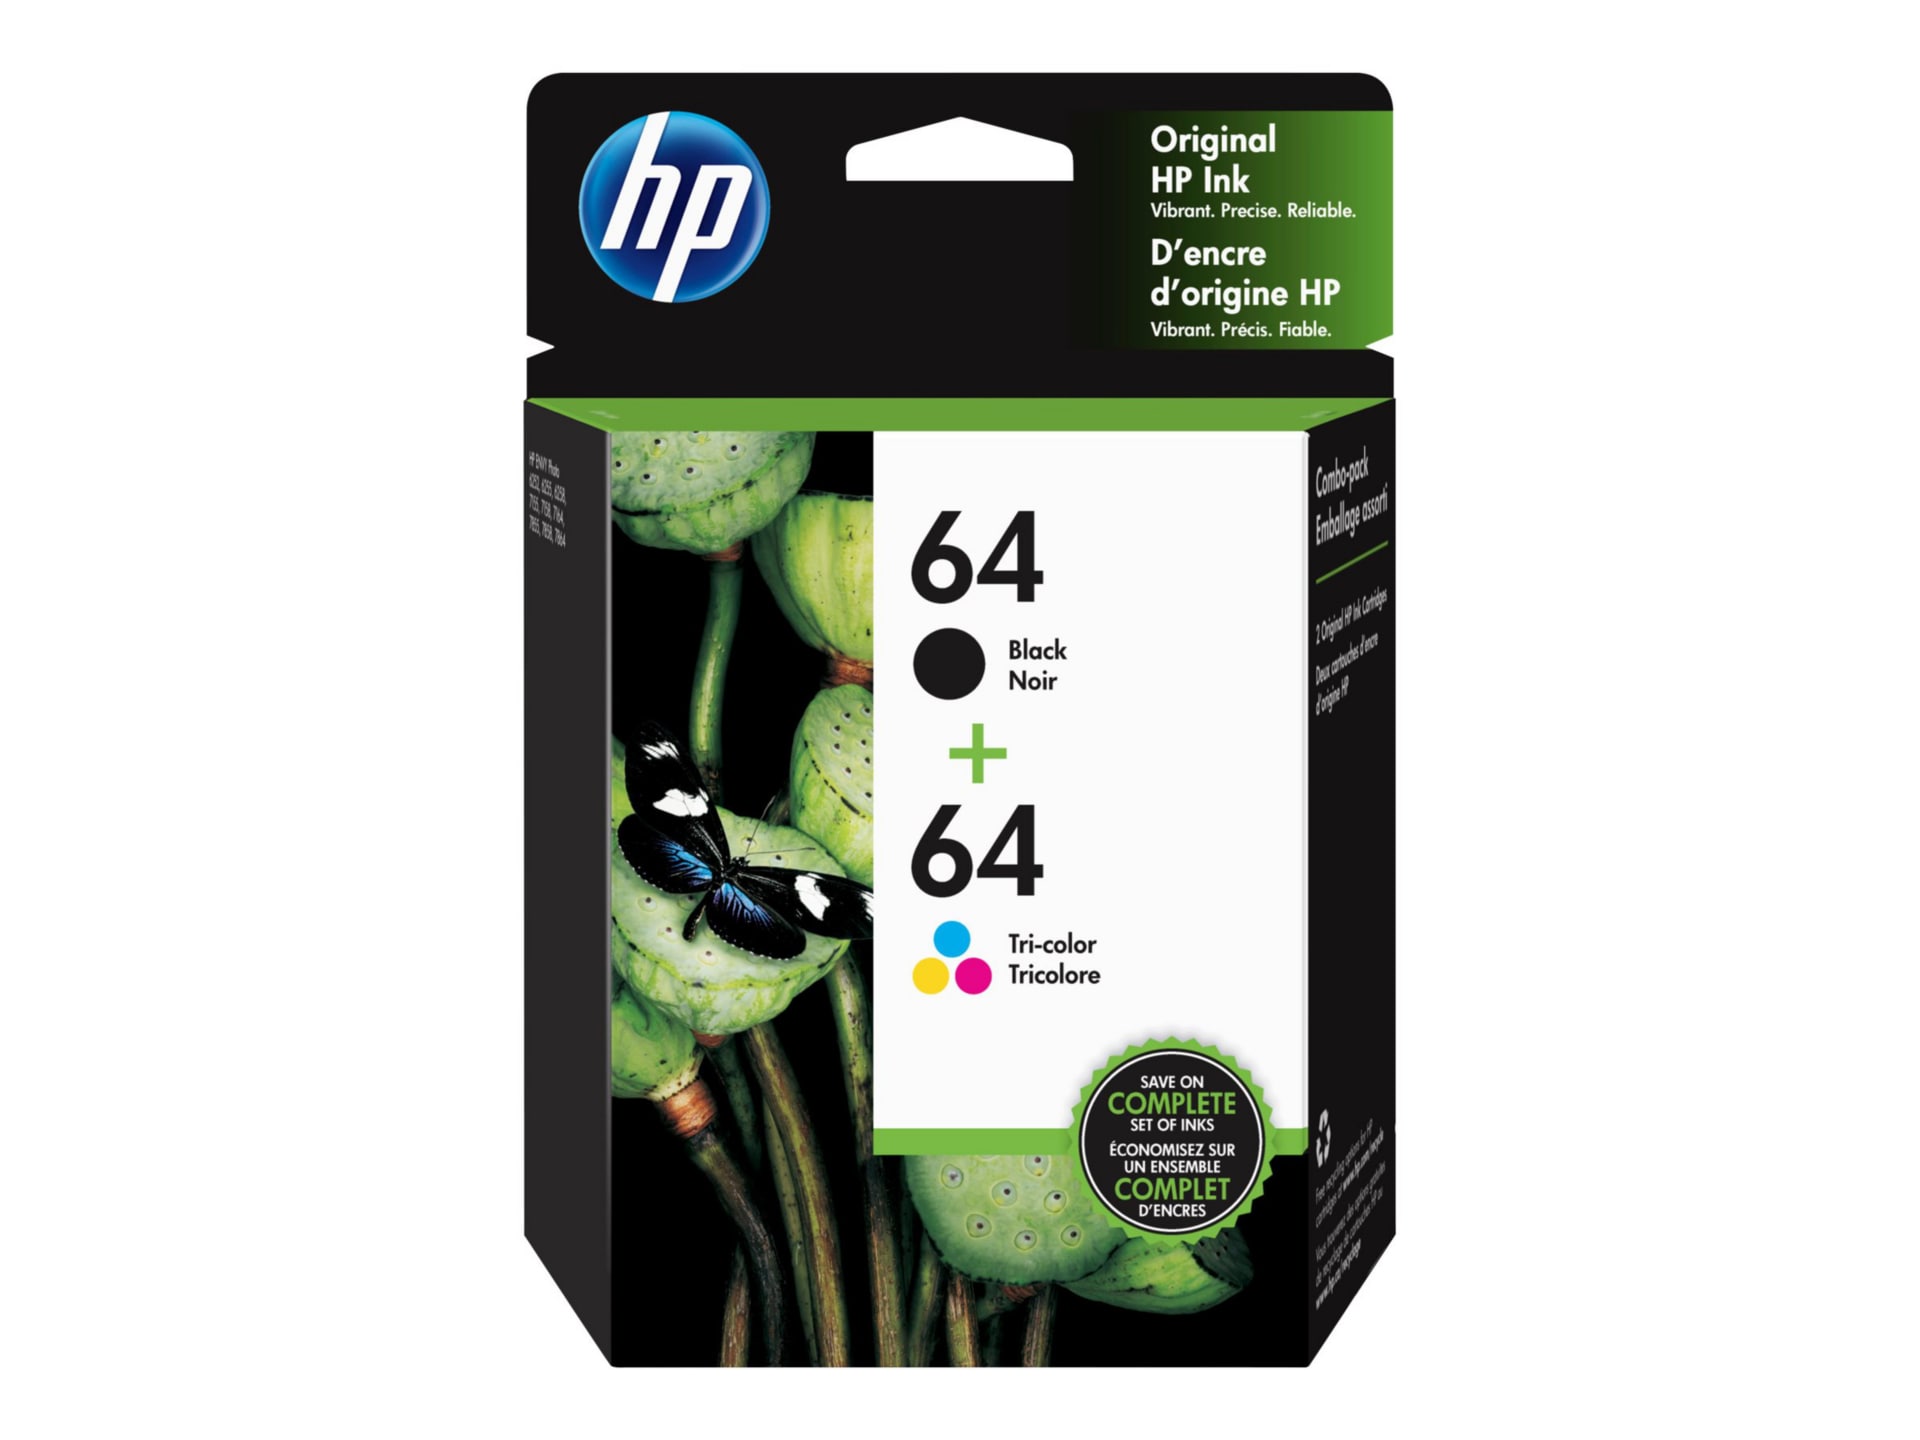 HP 64 Original High Yield Inkjet Ink Cartridge - Black, Tri-color - 2 / Pack